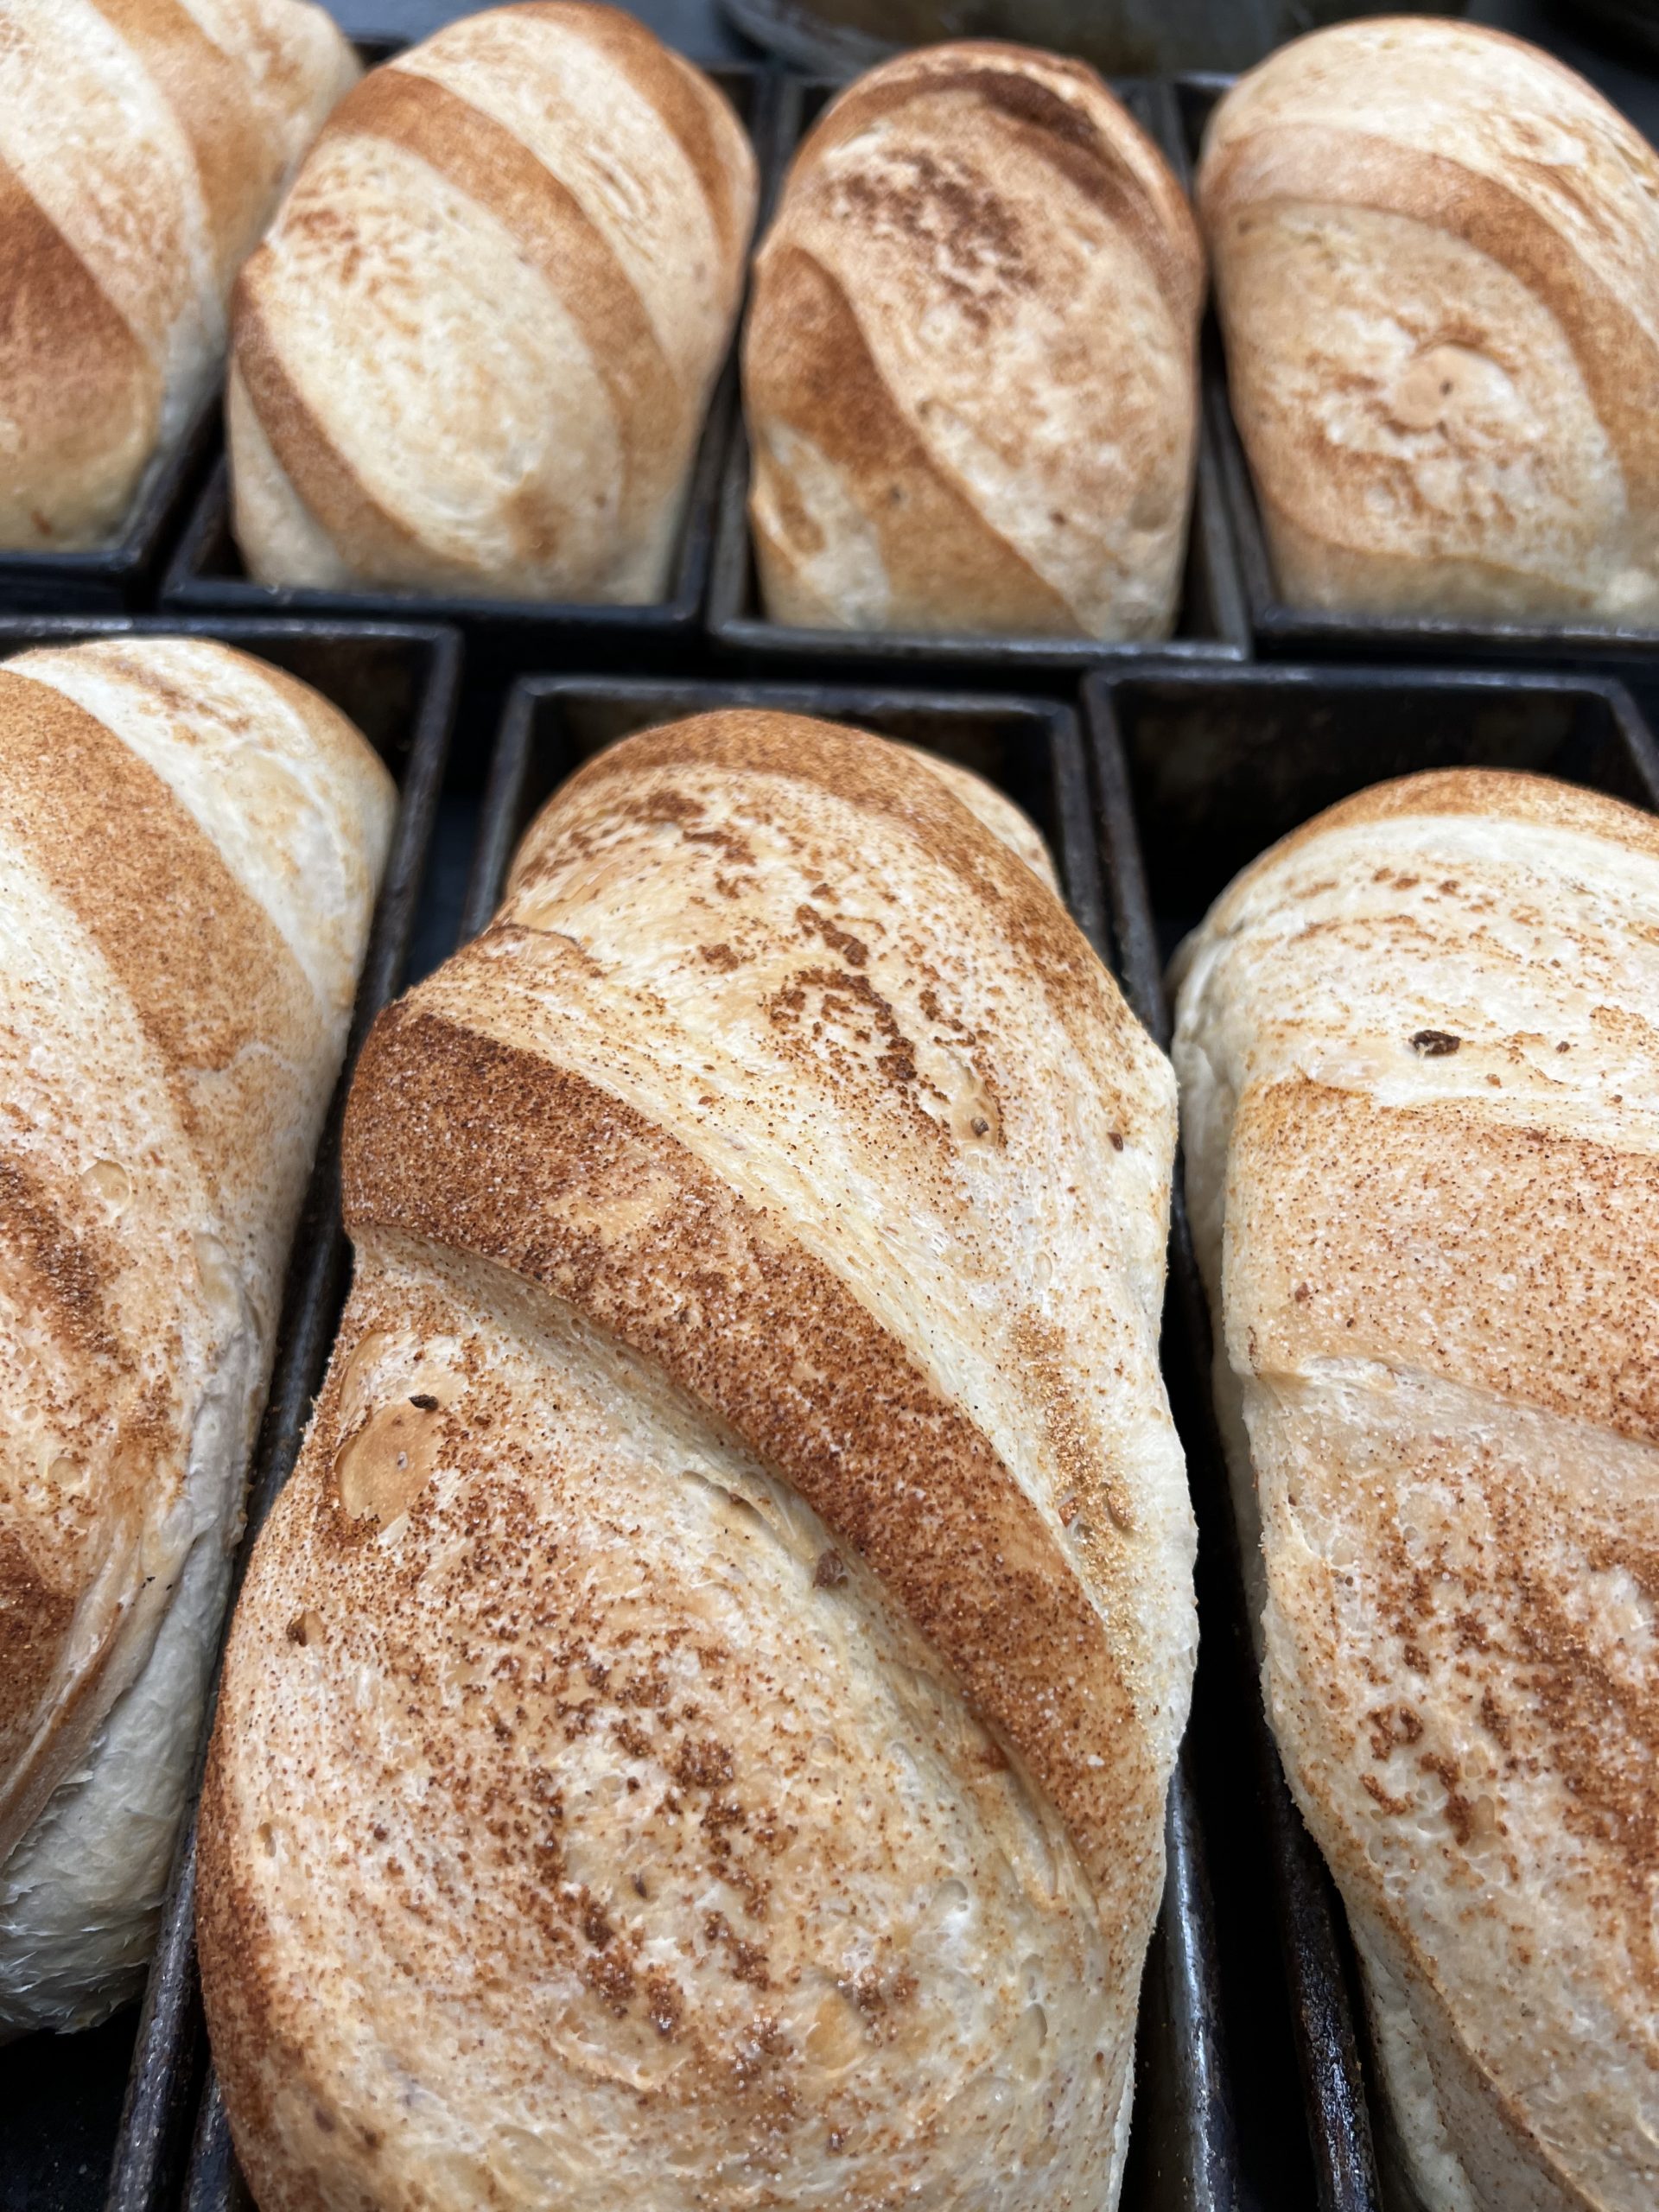 Fresh baked bread in pans